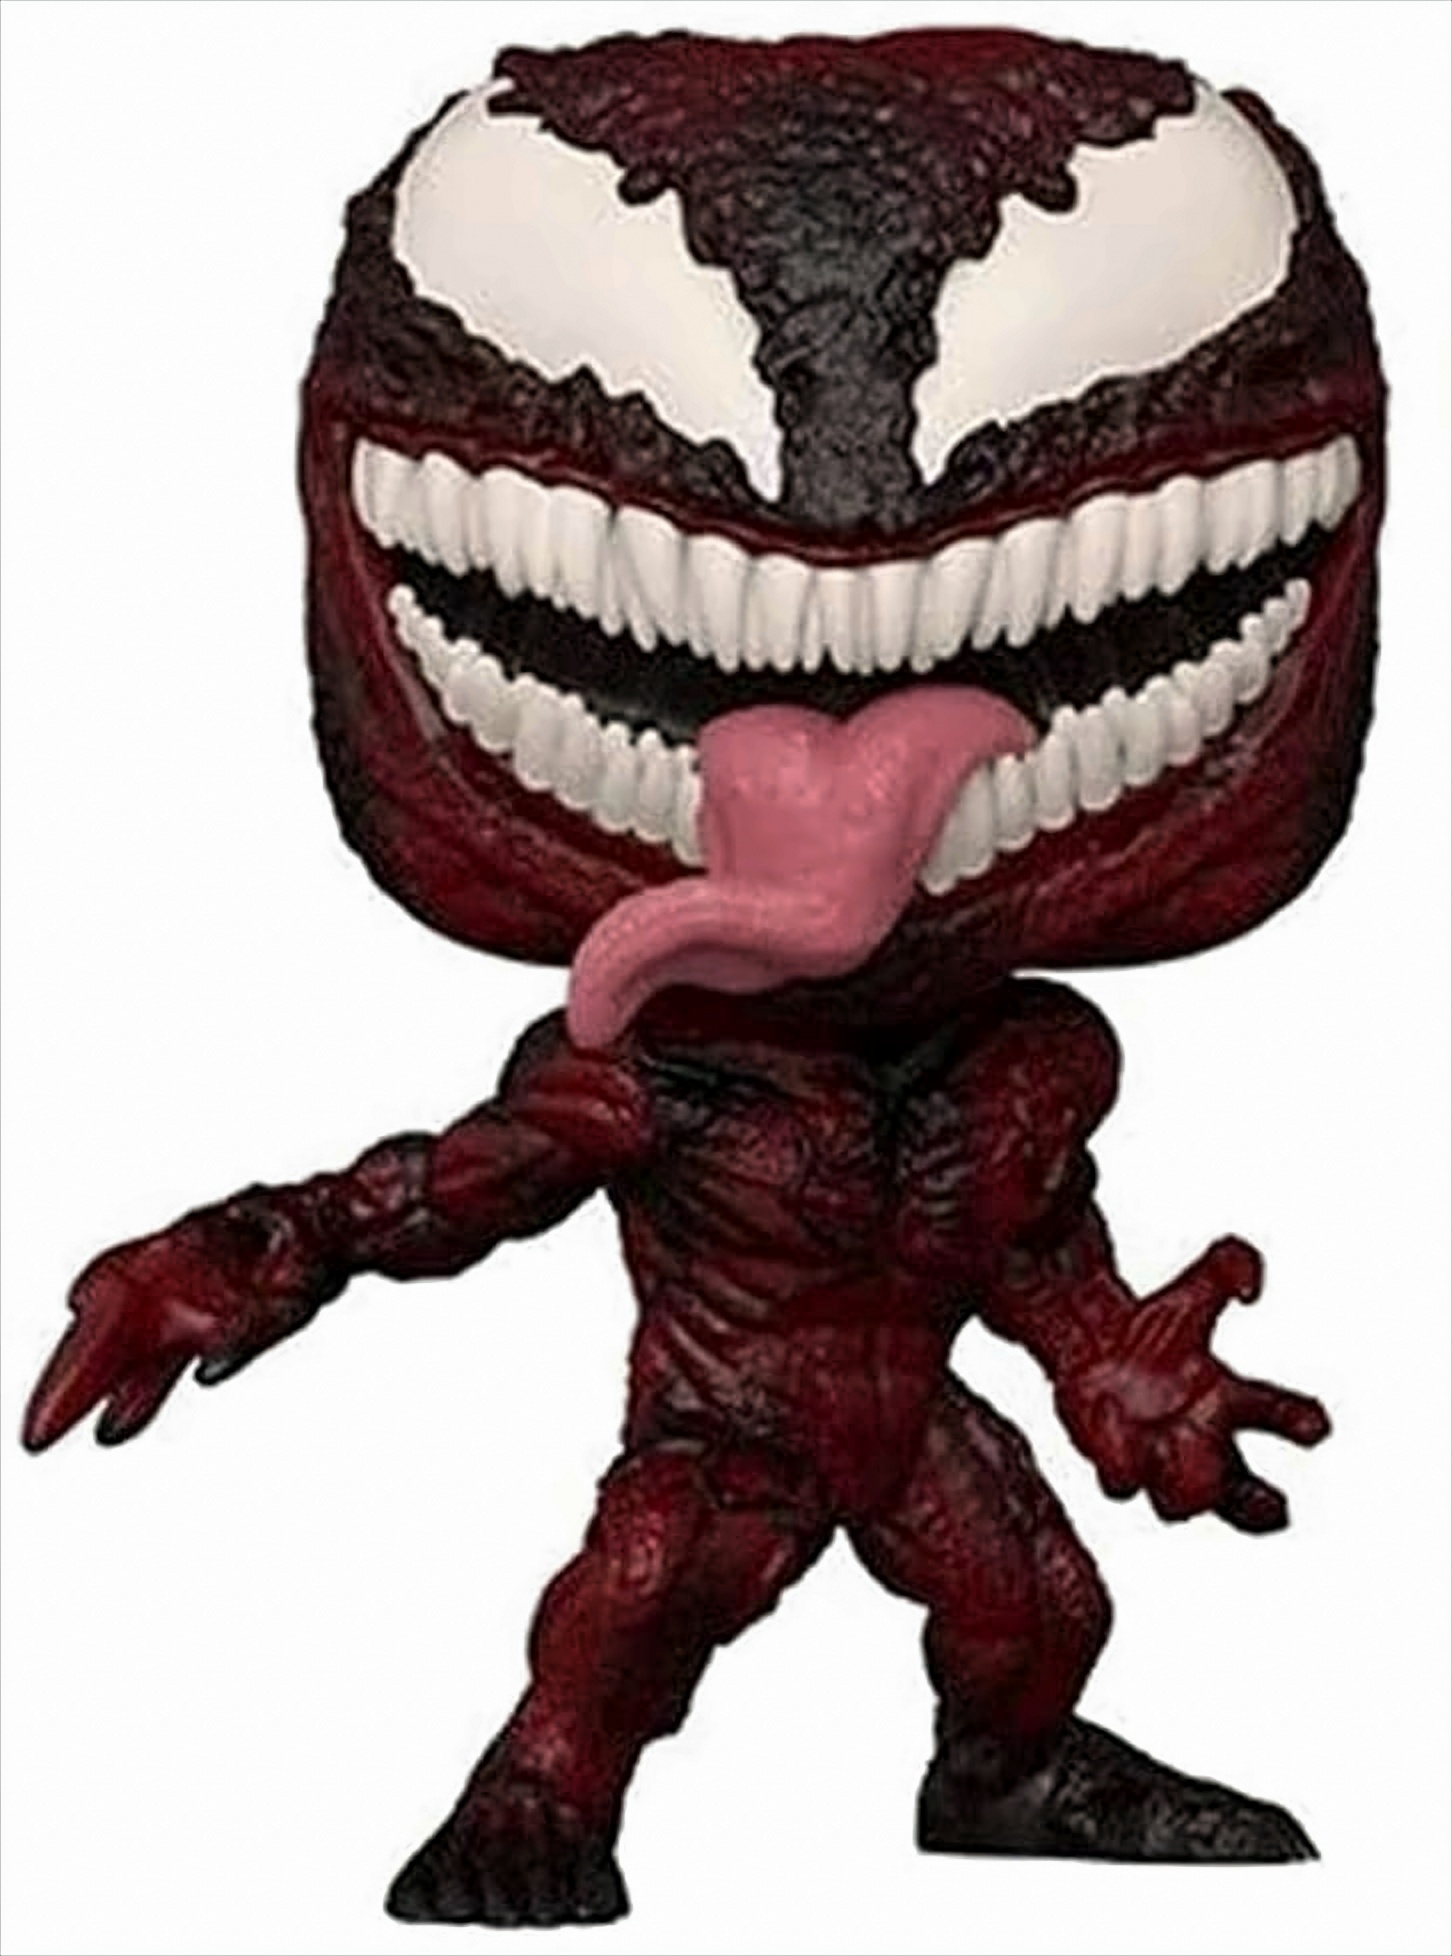 - - Venom POP Carnage